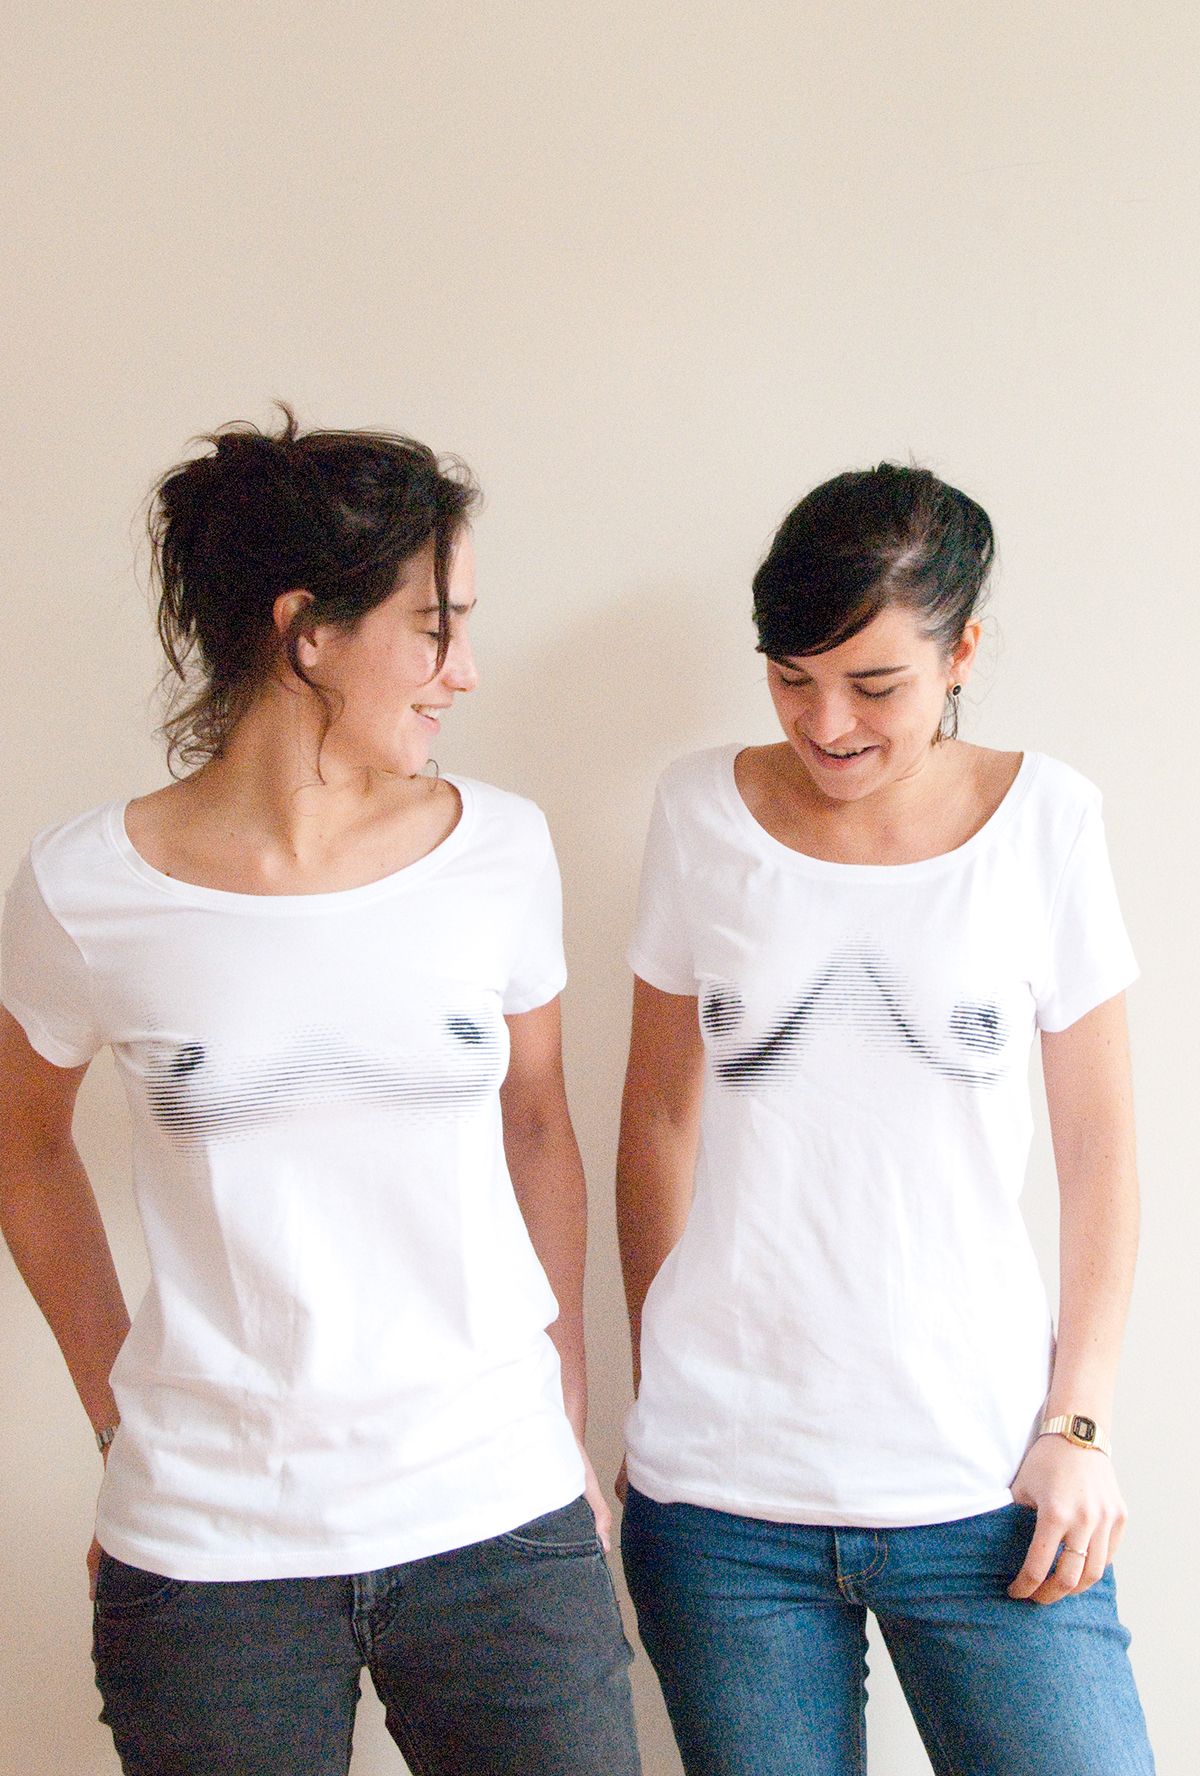 tits women Brest bobs Mama t-shirt